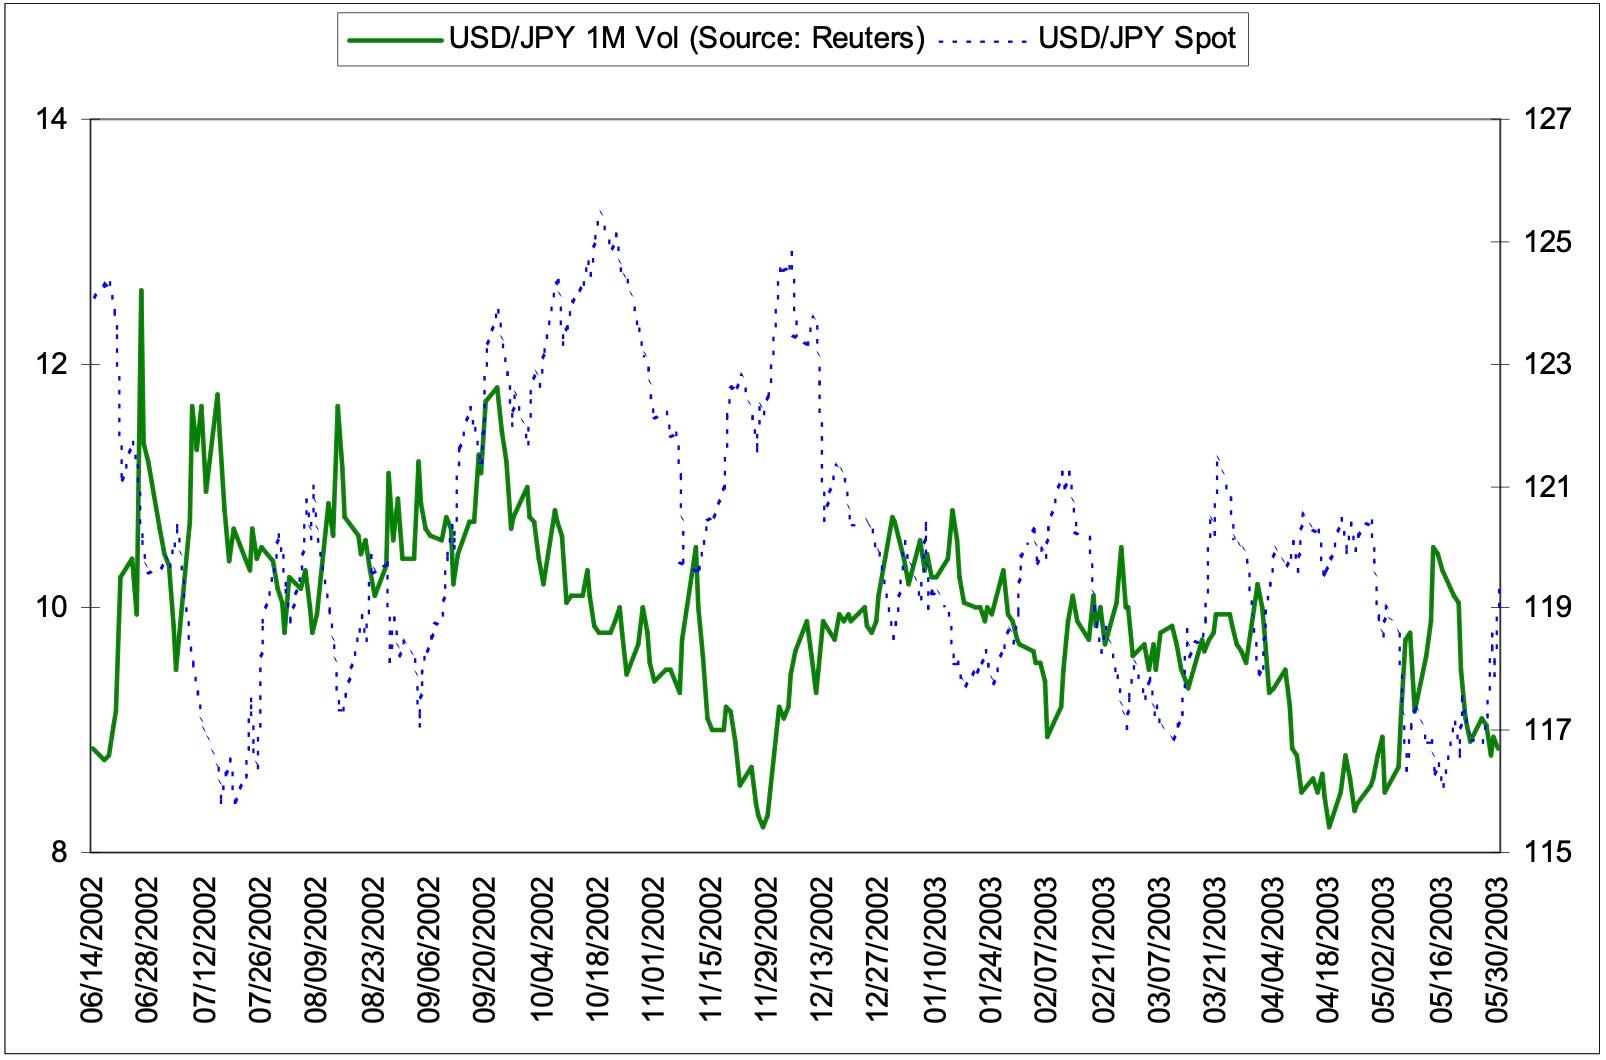 Volatility Versus Spot Image